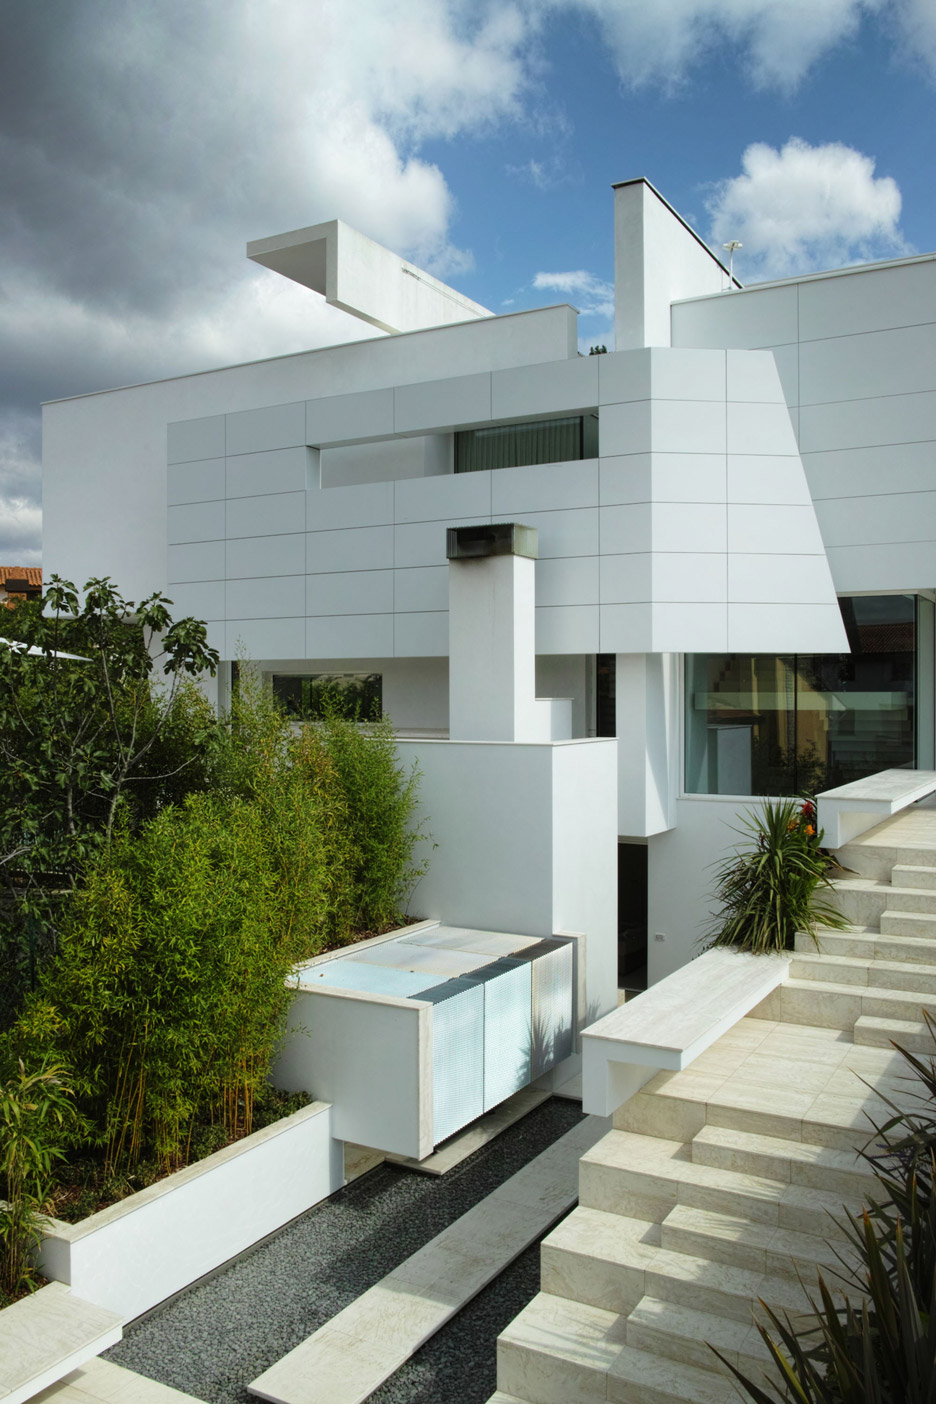 Villa N by Architettura Matassoni